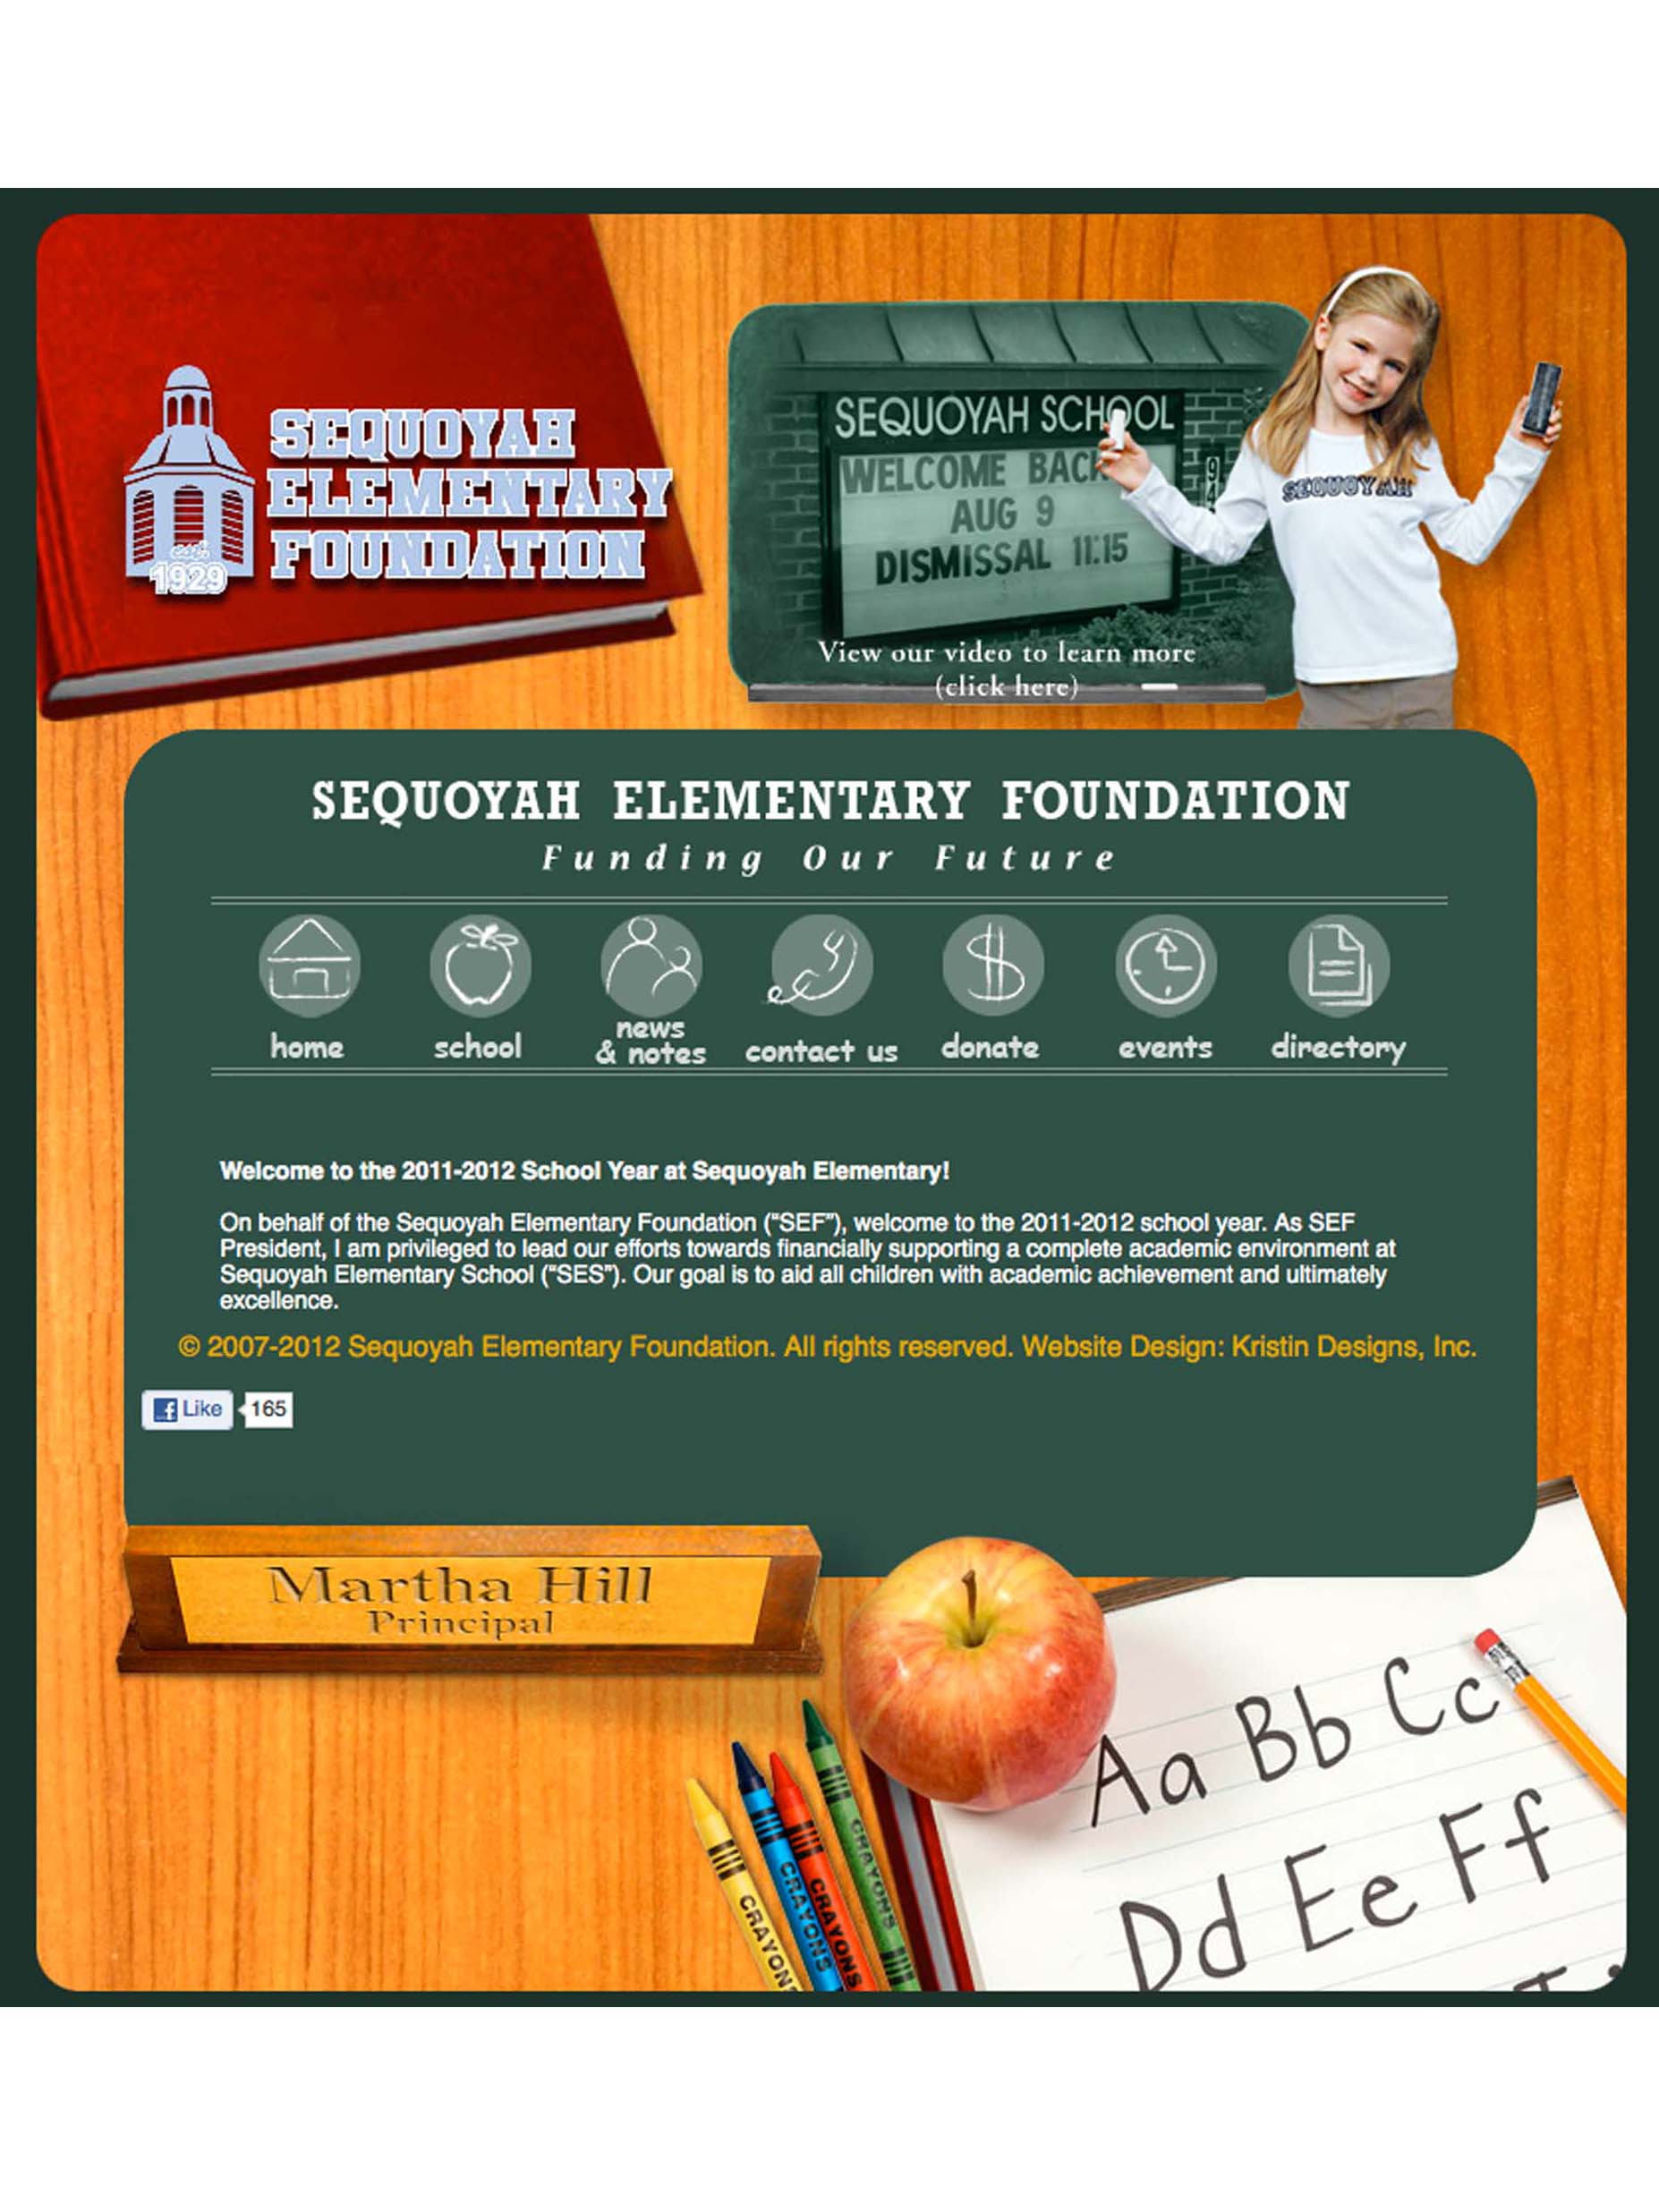 Sequoyah Elementary Foundation Web Development